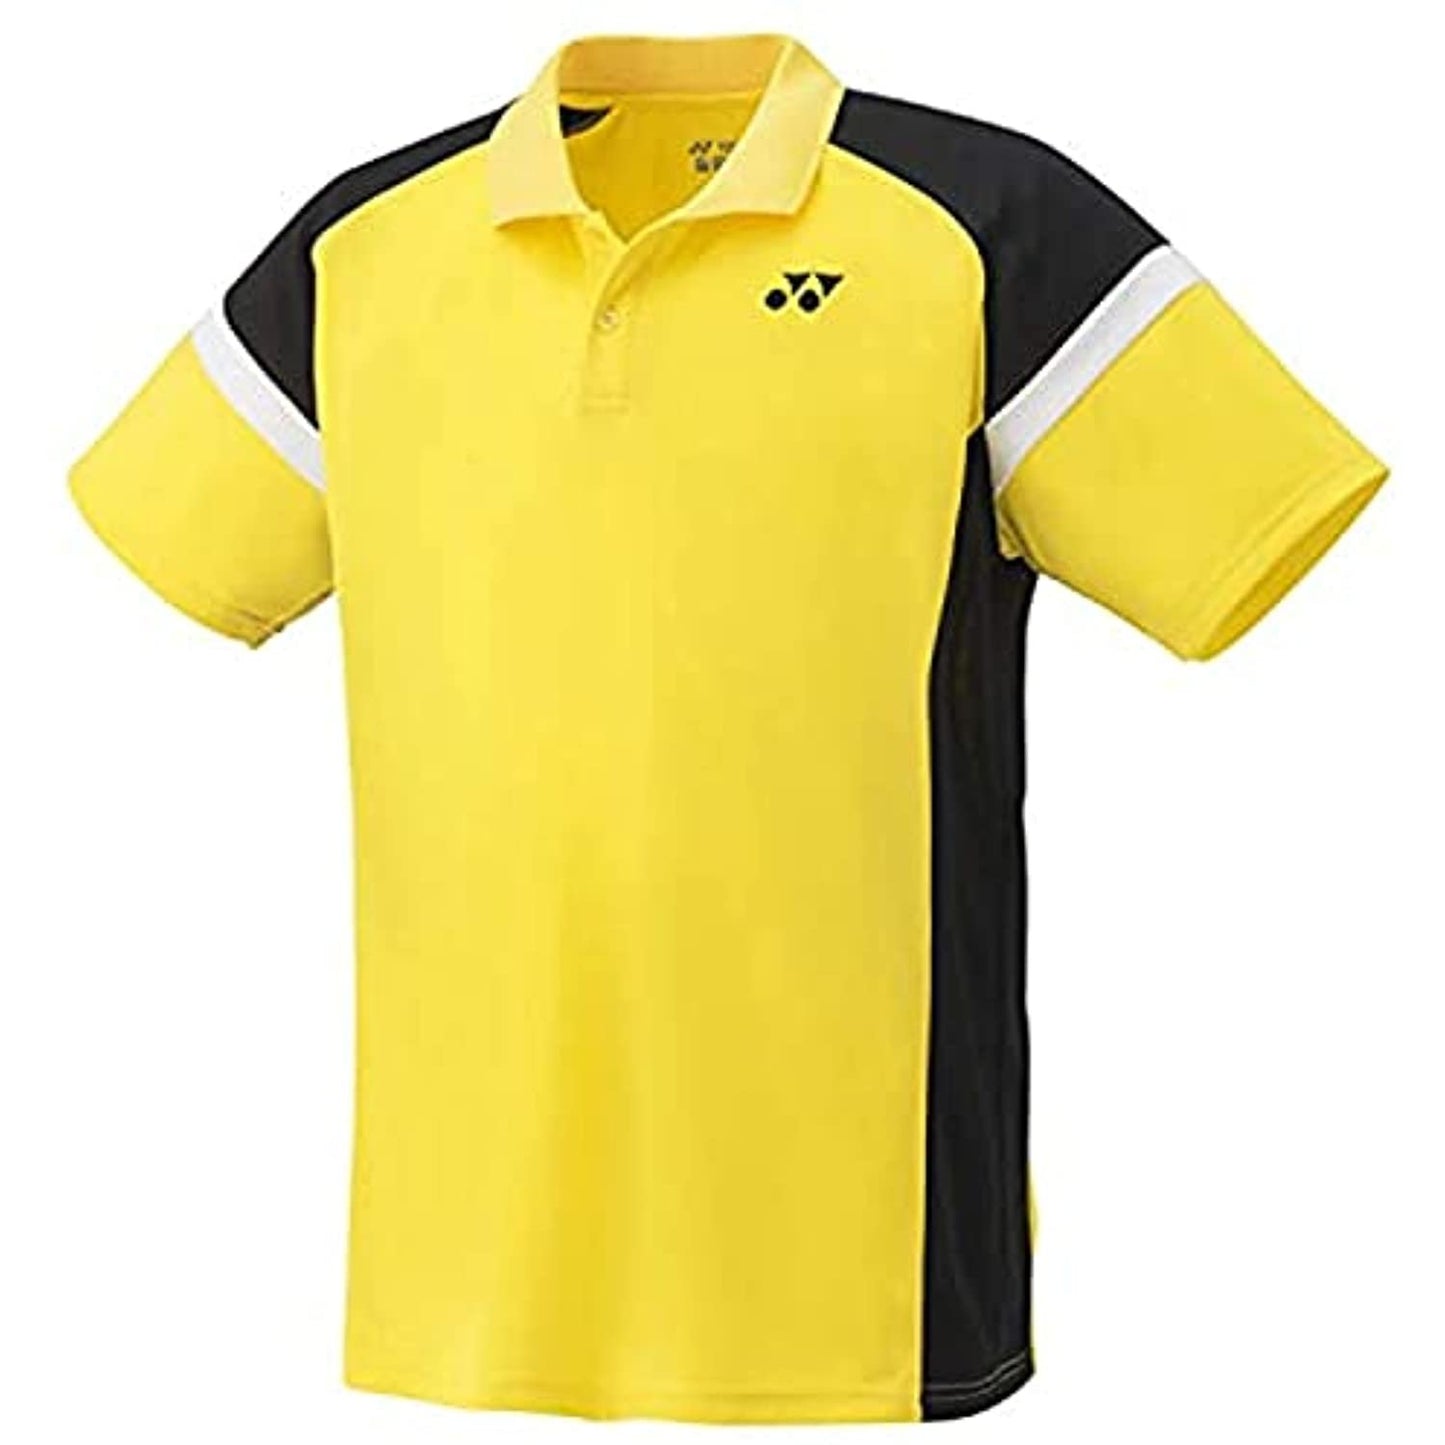 Yonex Men's Polo Shirt YM0002EX Light Yellow (X-Small)